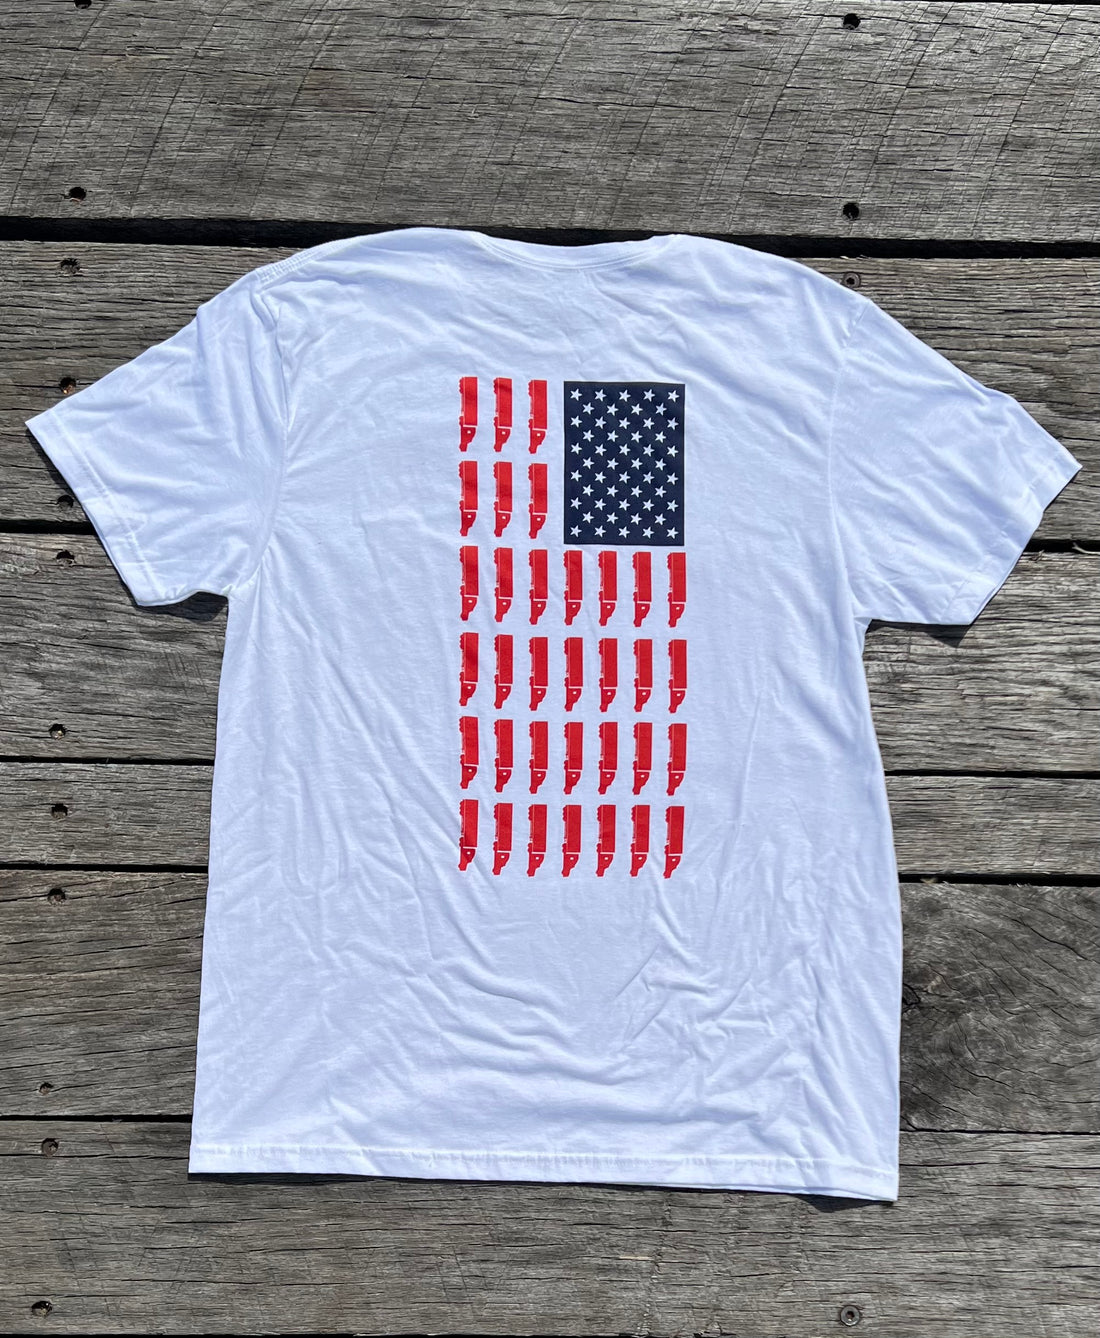 BreakerOne9 - USA Trucker Flag T-shirt - White